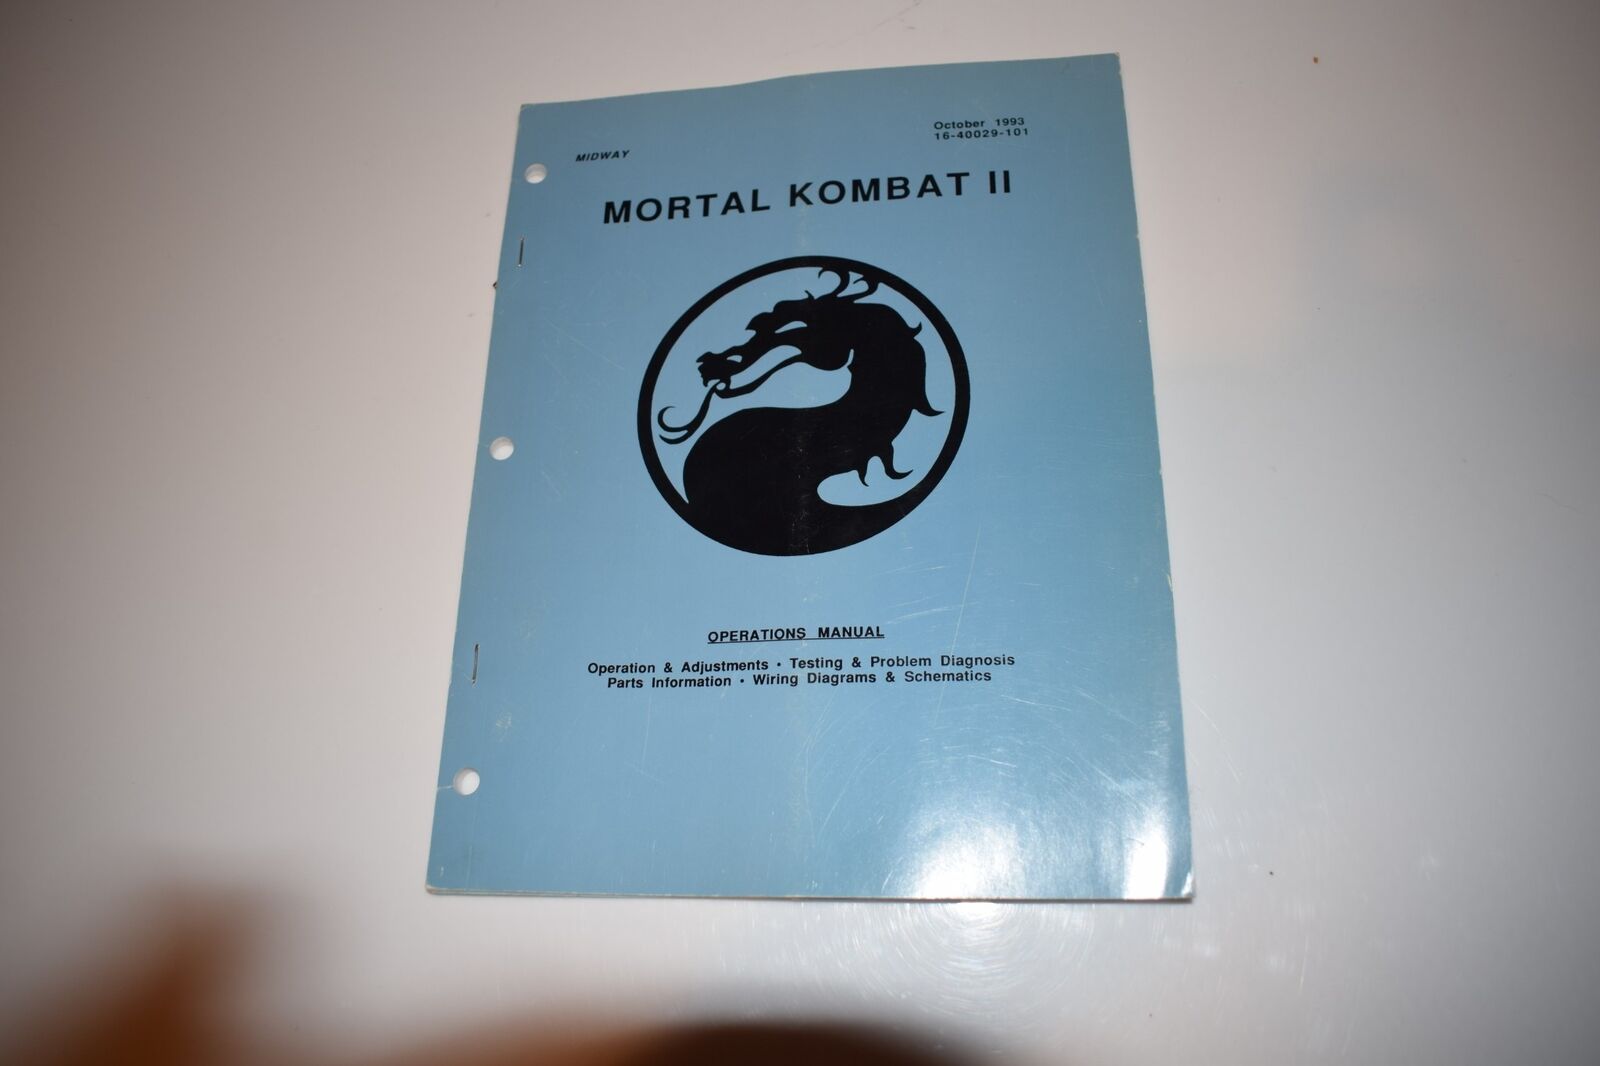 MORTAL KOMBAT II OPERATIONS MANUAL MIDWAY OCTOBER 1993 16-40029-101 (BOOK750)